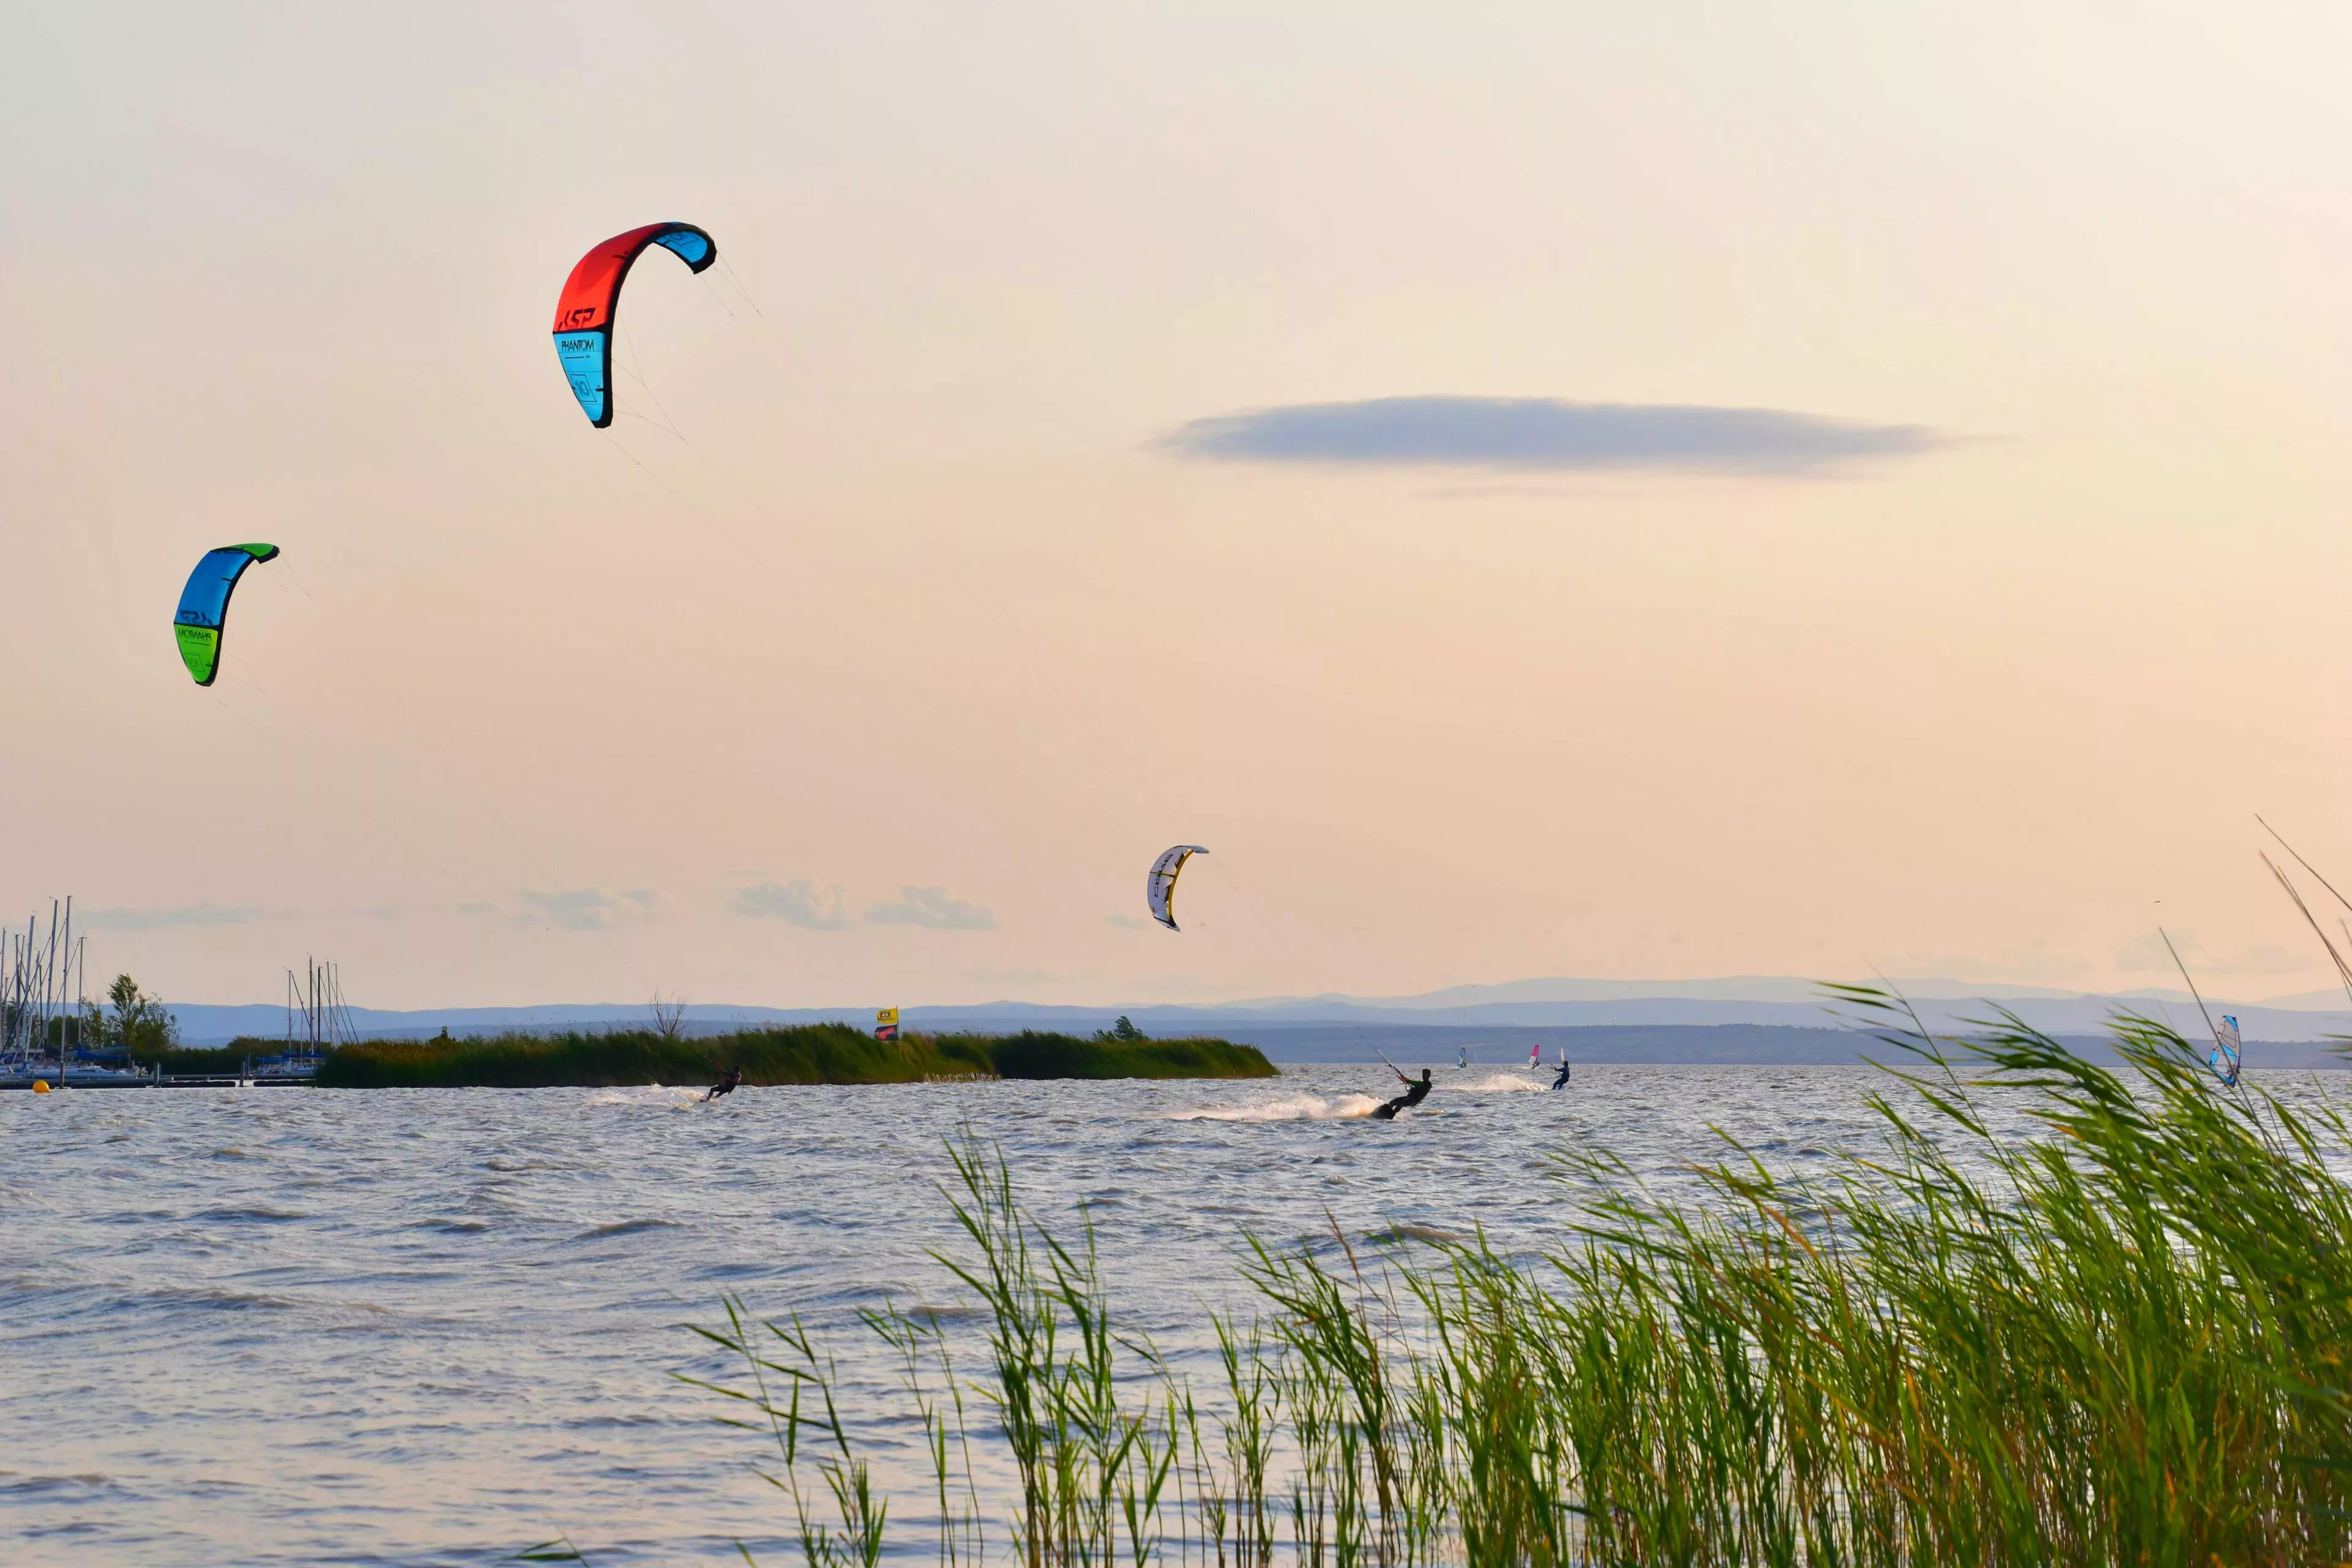 Sicily Kite Park in Italy, Europe | Kitesurfing - Rated 1.2